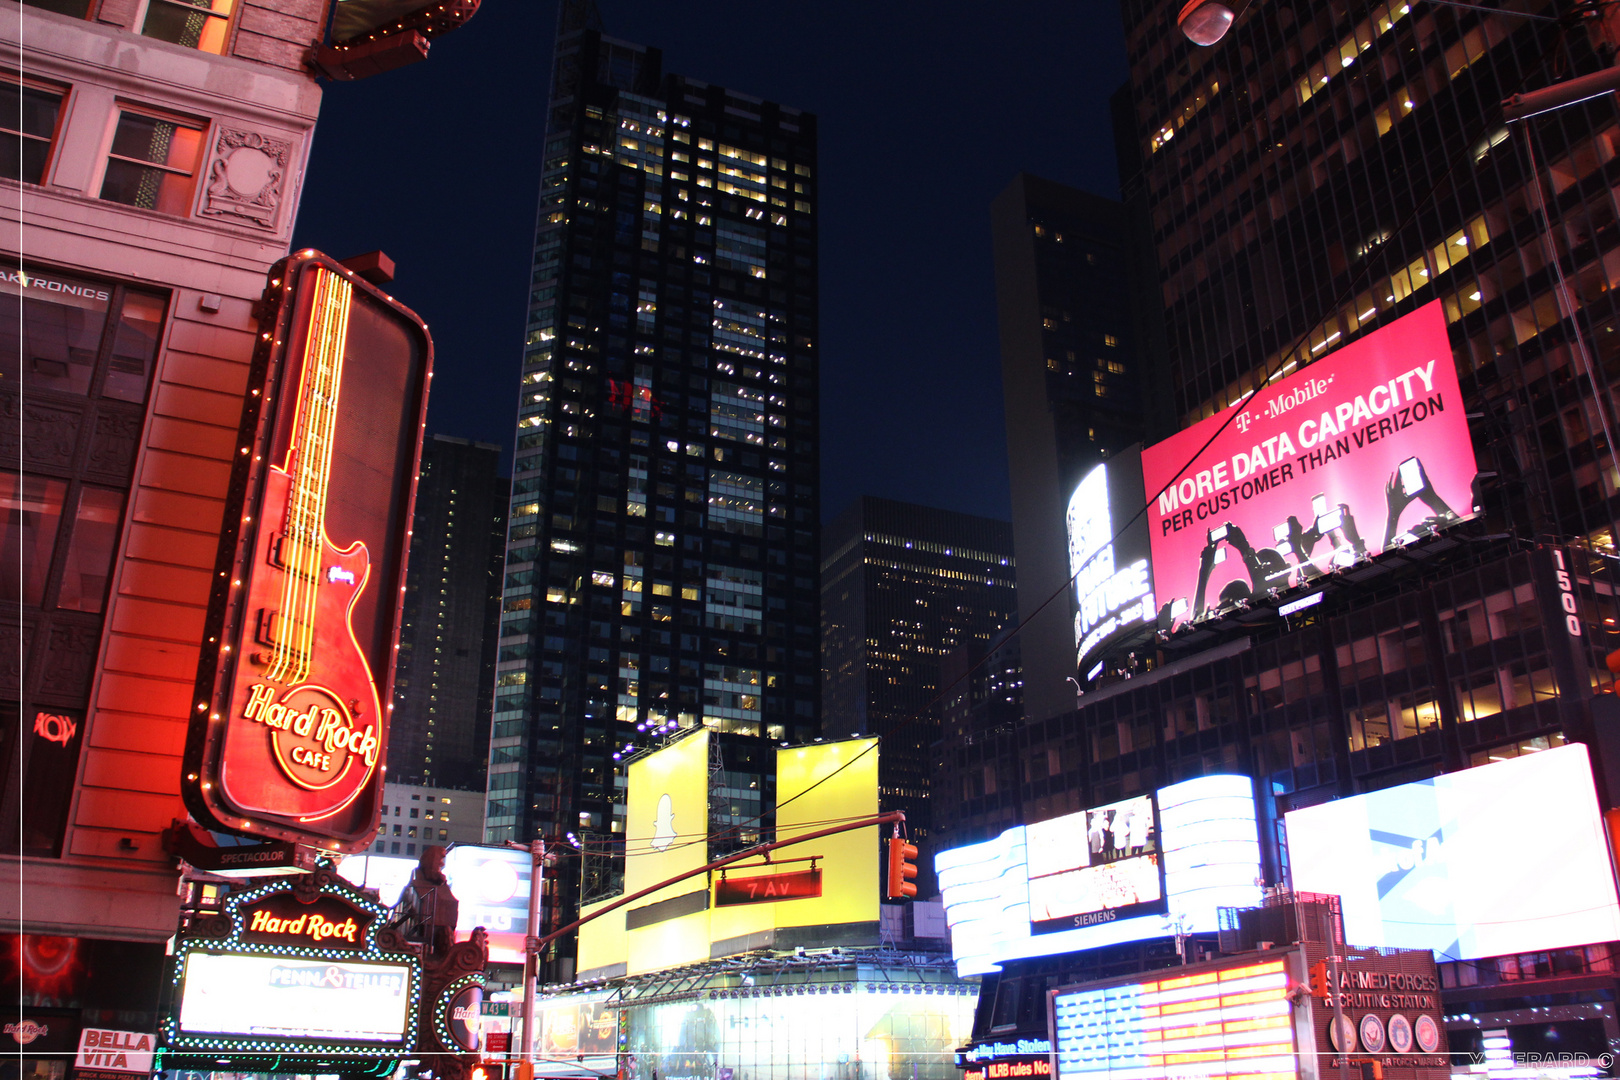 Time Square - Night Lights